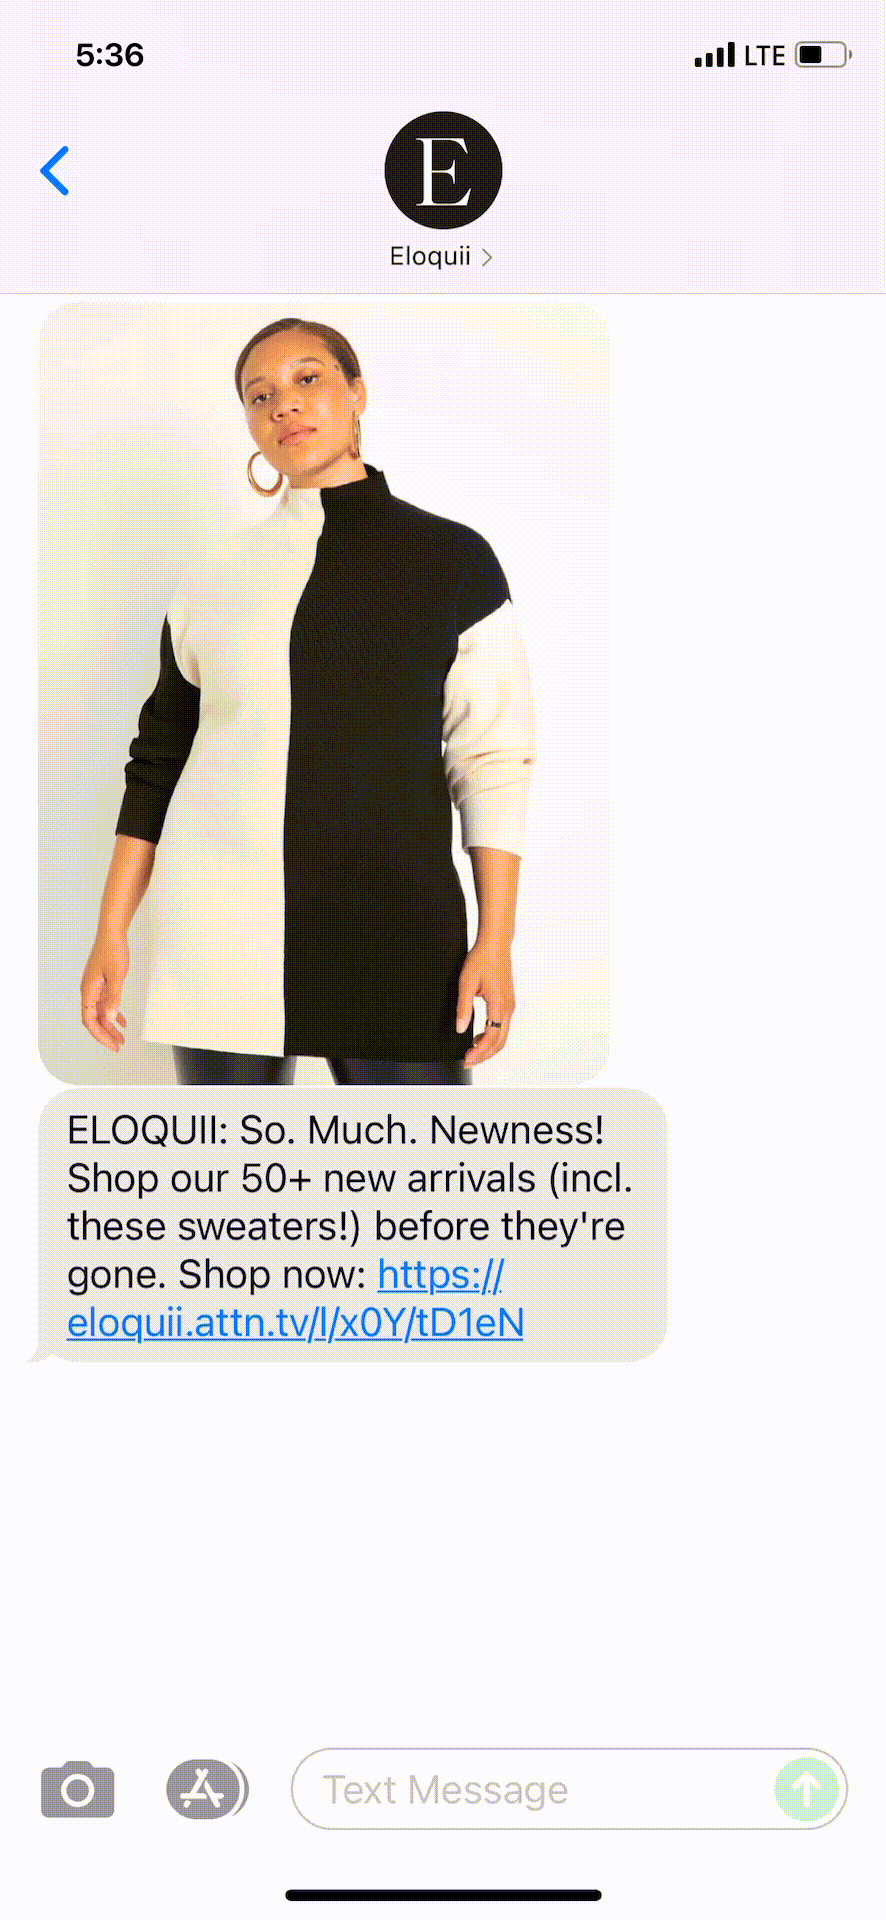 Eloquii-Text-Message-Marketing-Example-09.08.2021